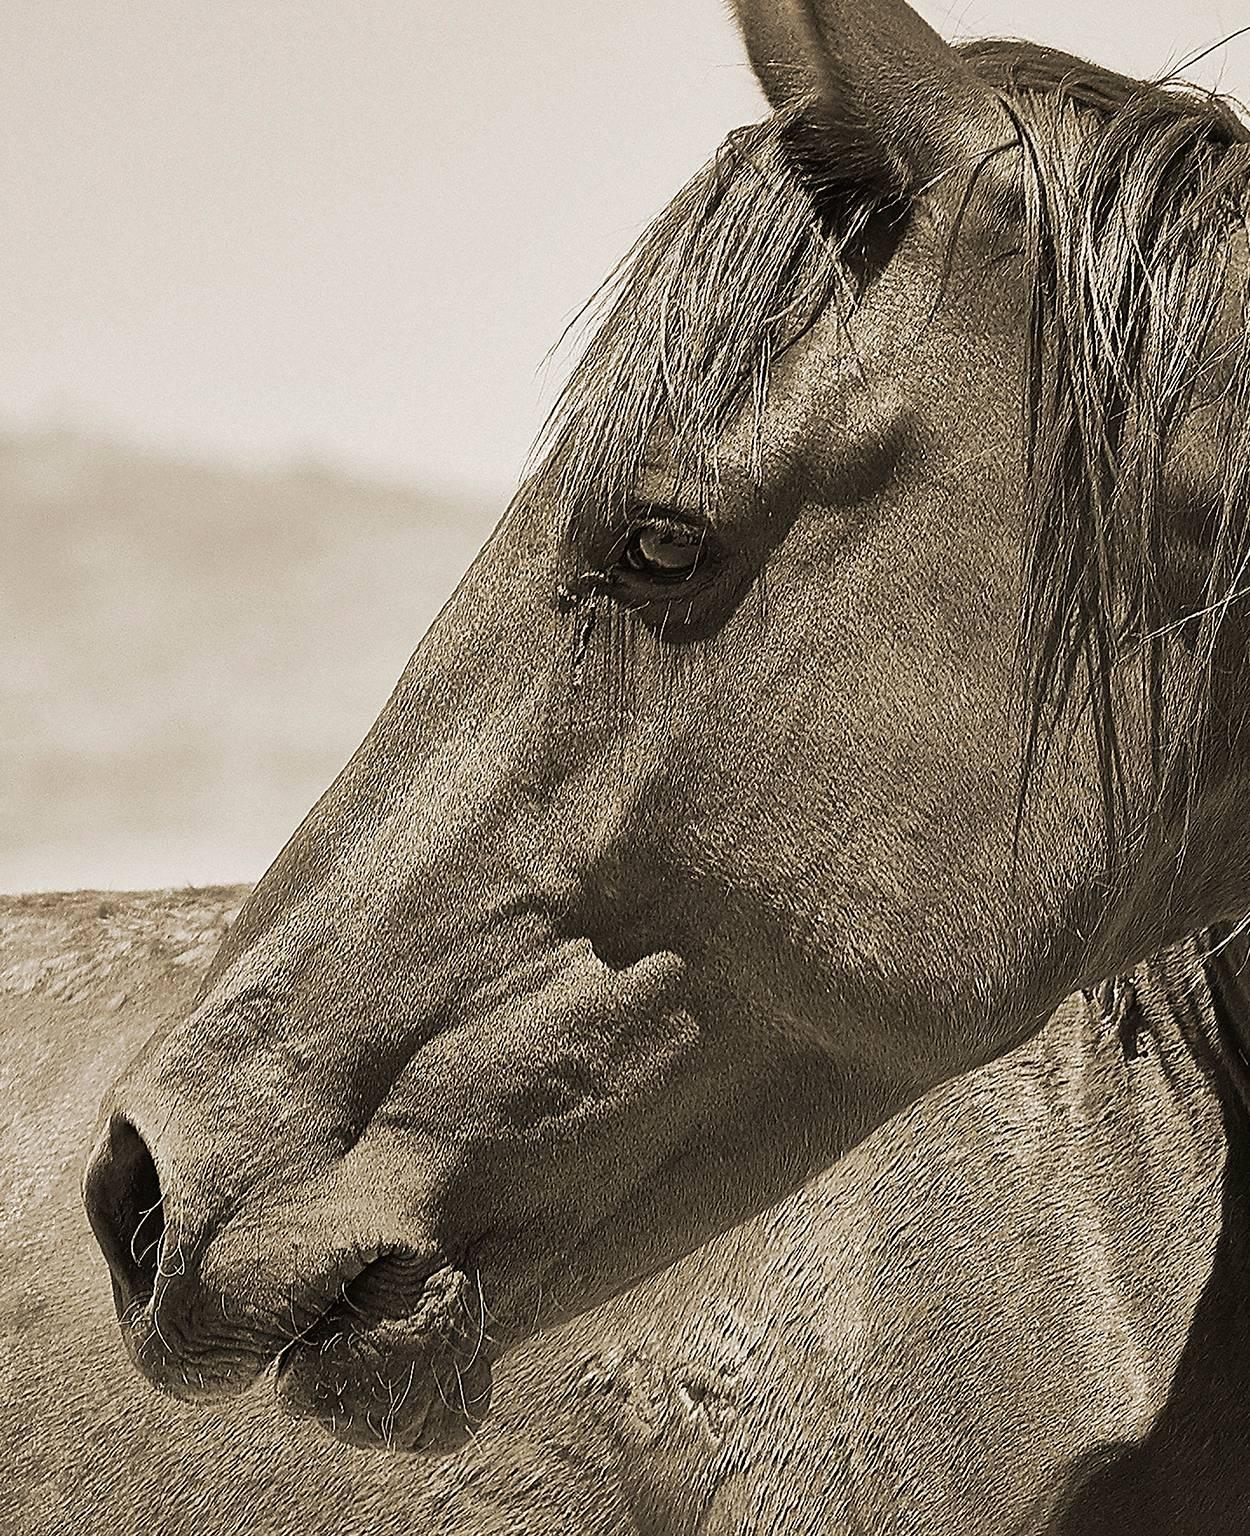 Namibian Horse No. 2 - Photograph by Chris Gordaneer